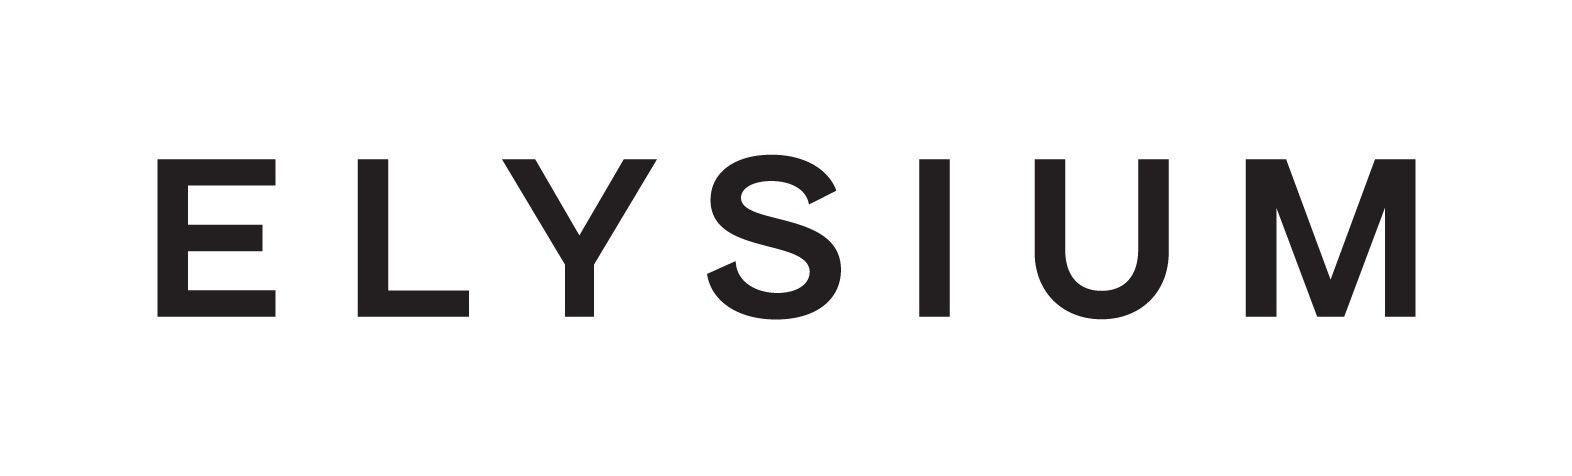 Elysium Health Raises $40M in Series C Financing - FinSMEs